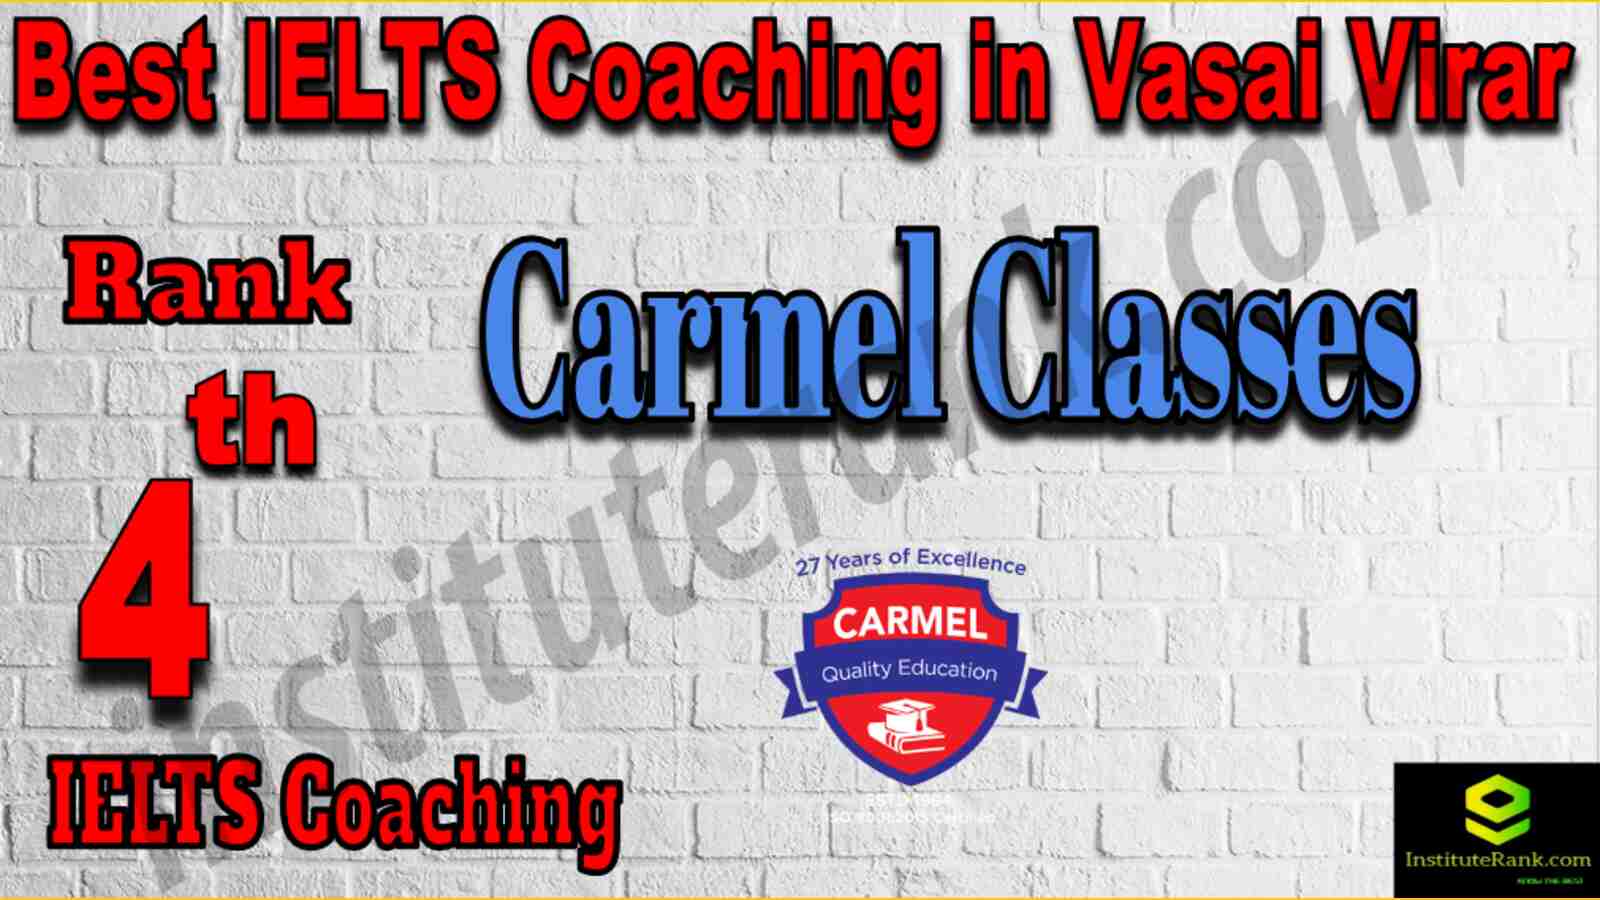 4th Best IELTS Coaching in Vasai Virar